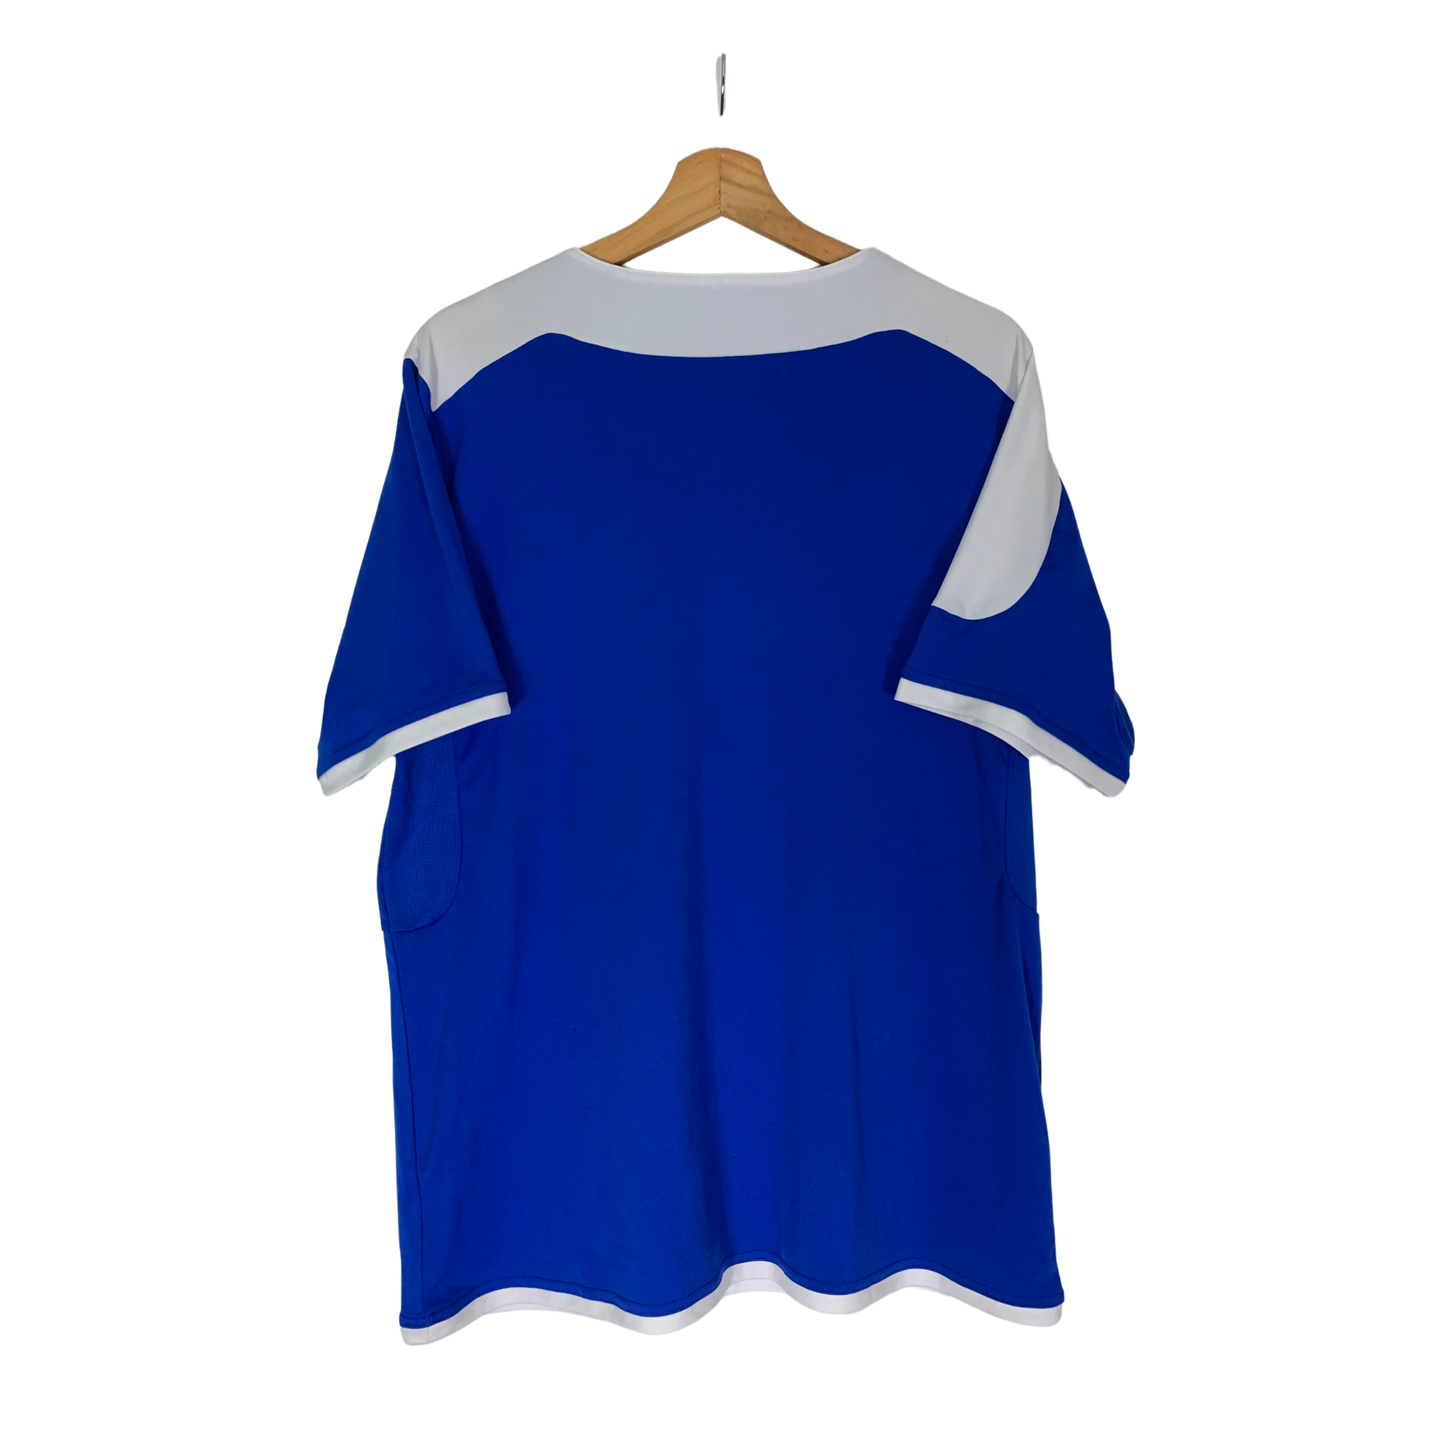 Classic Football Shirt Leicester City season 2007-2008 at InnoFoot